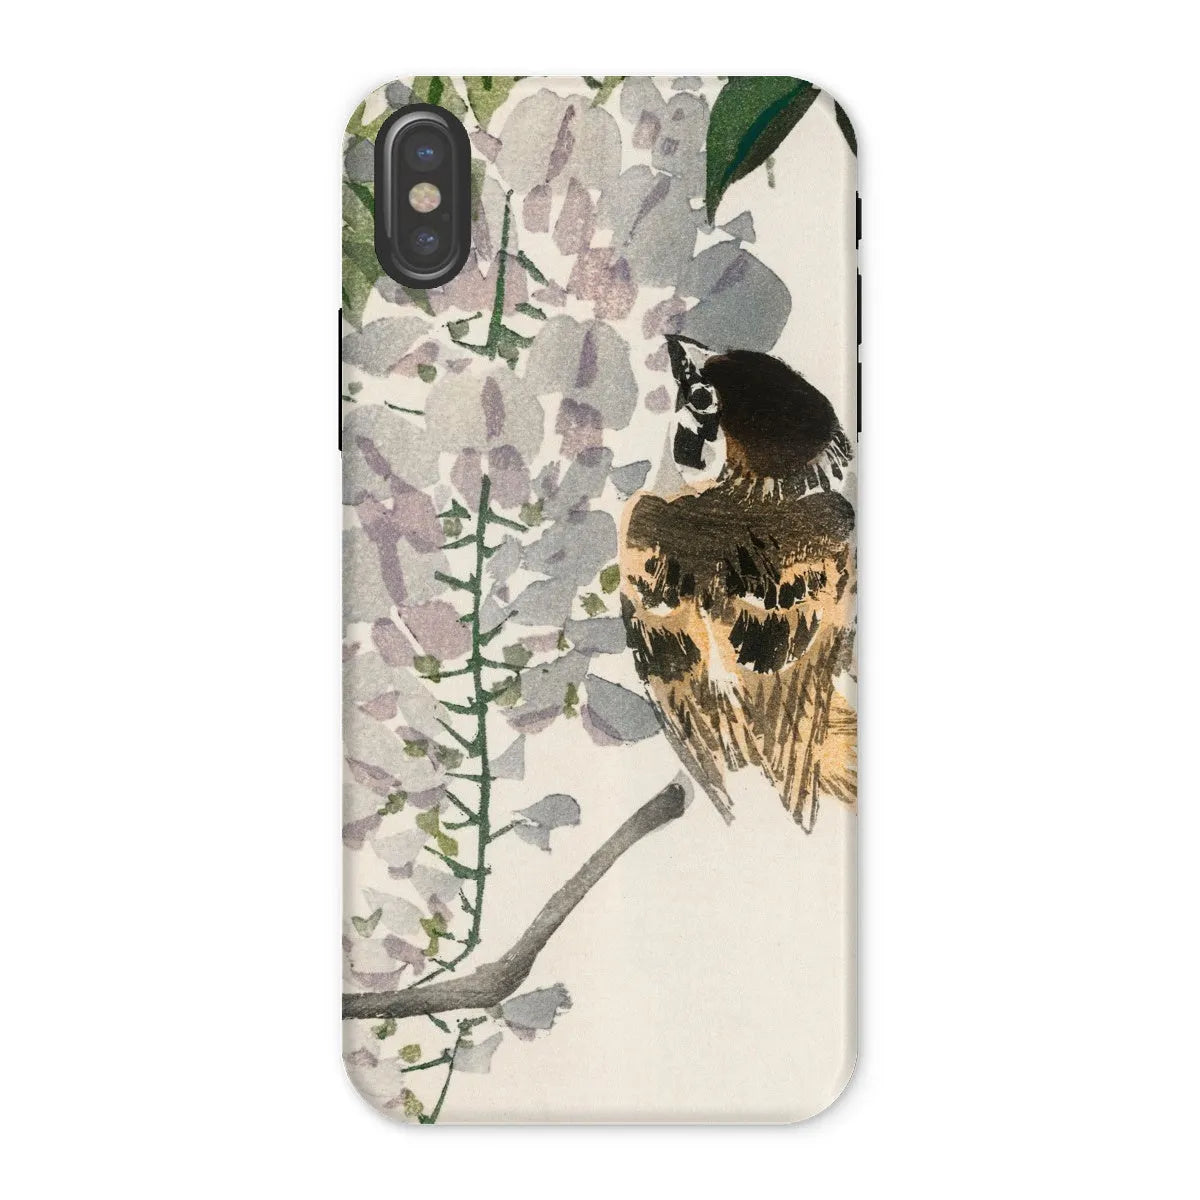 Sparrow On a Branch - Meiji Bird Phone Case - Kōno Bairei - Iphone x / Matte - Mobile Phone Cases - Aesthetic Art